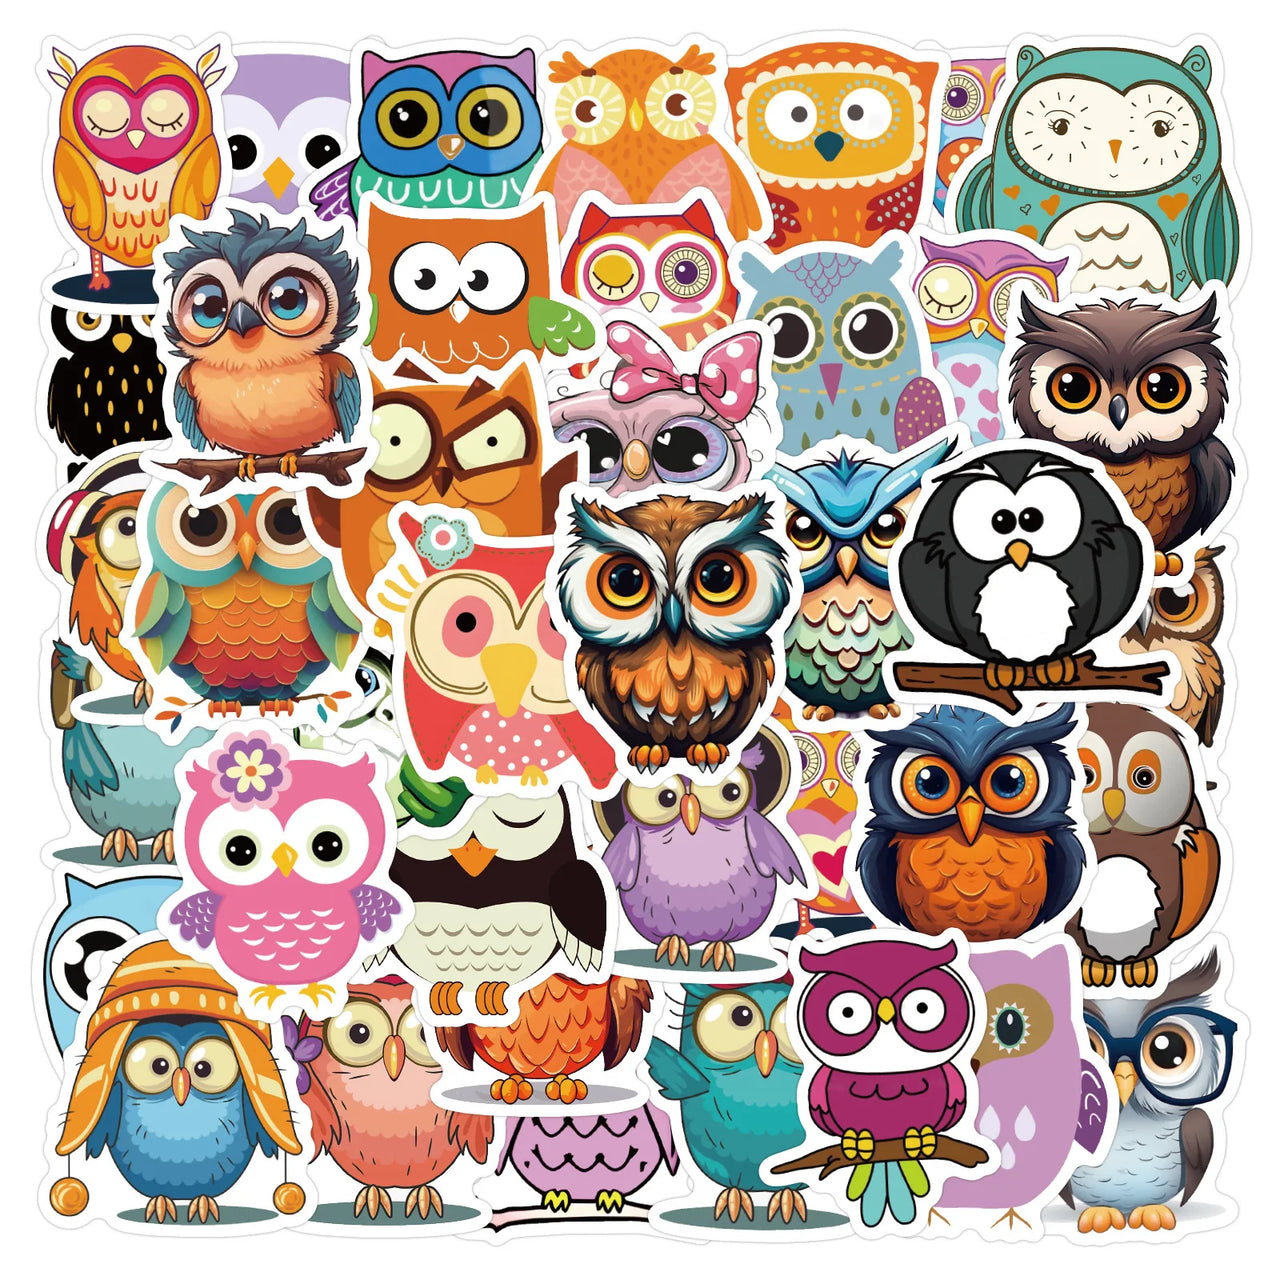 Owl Laptop Stickers